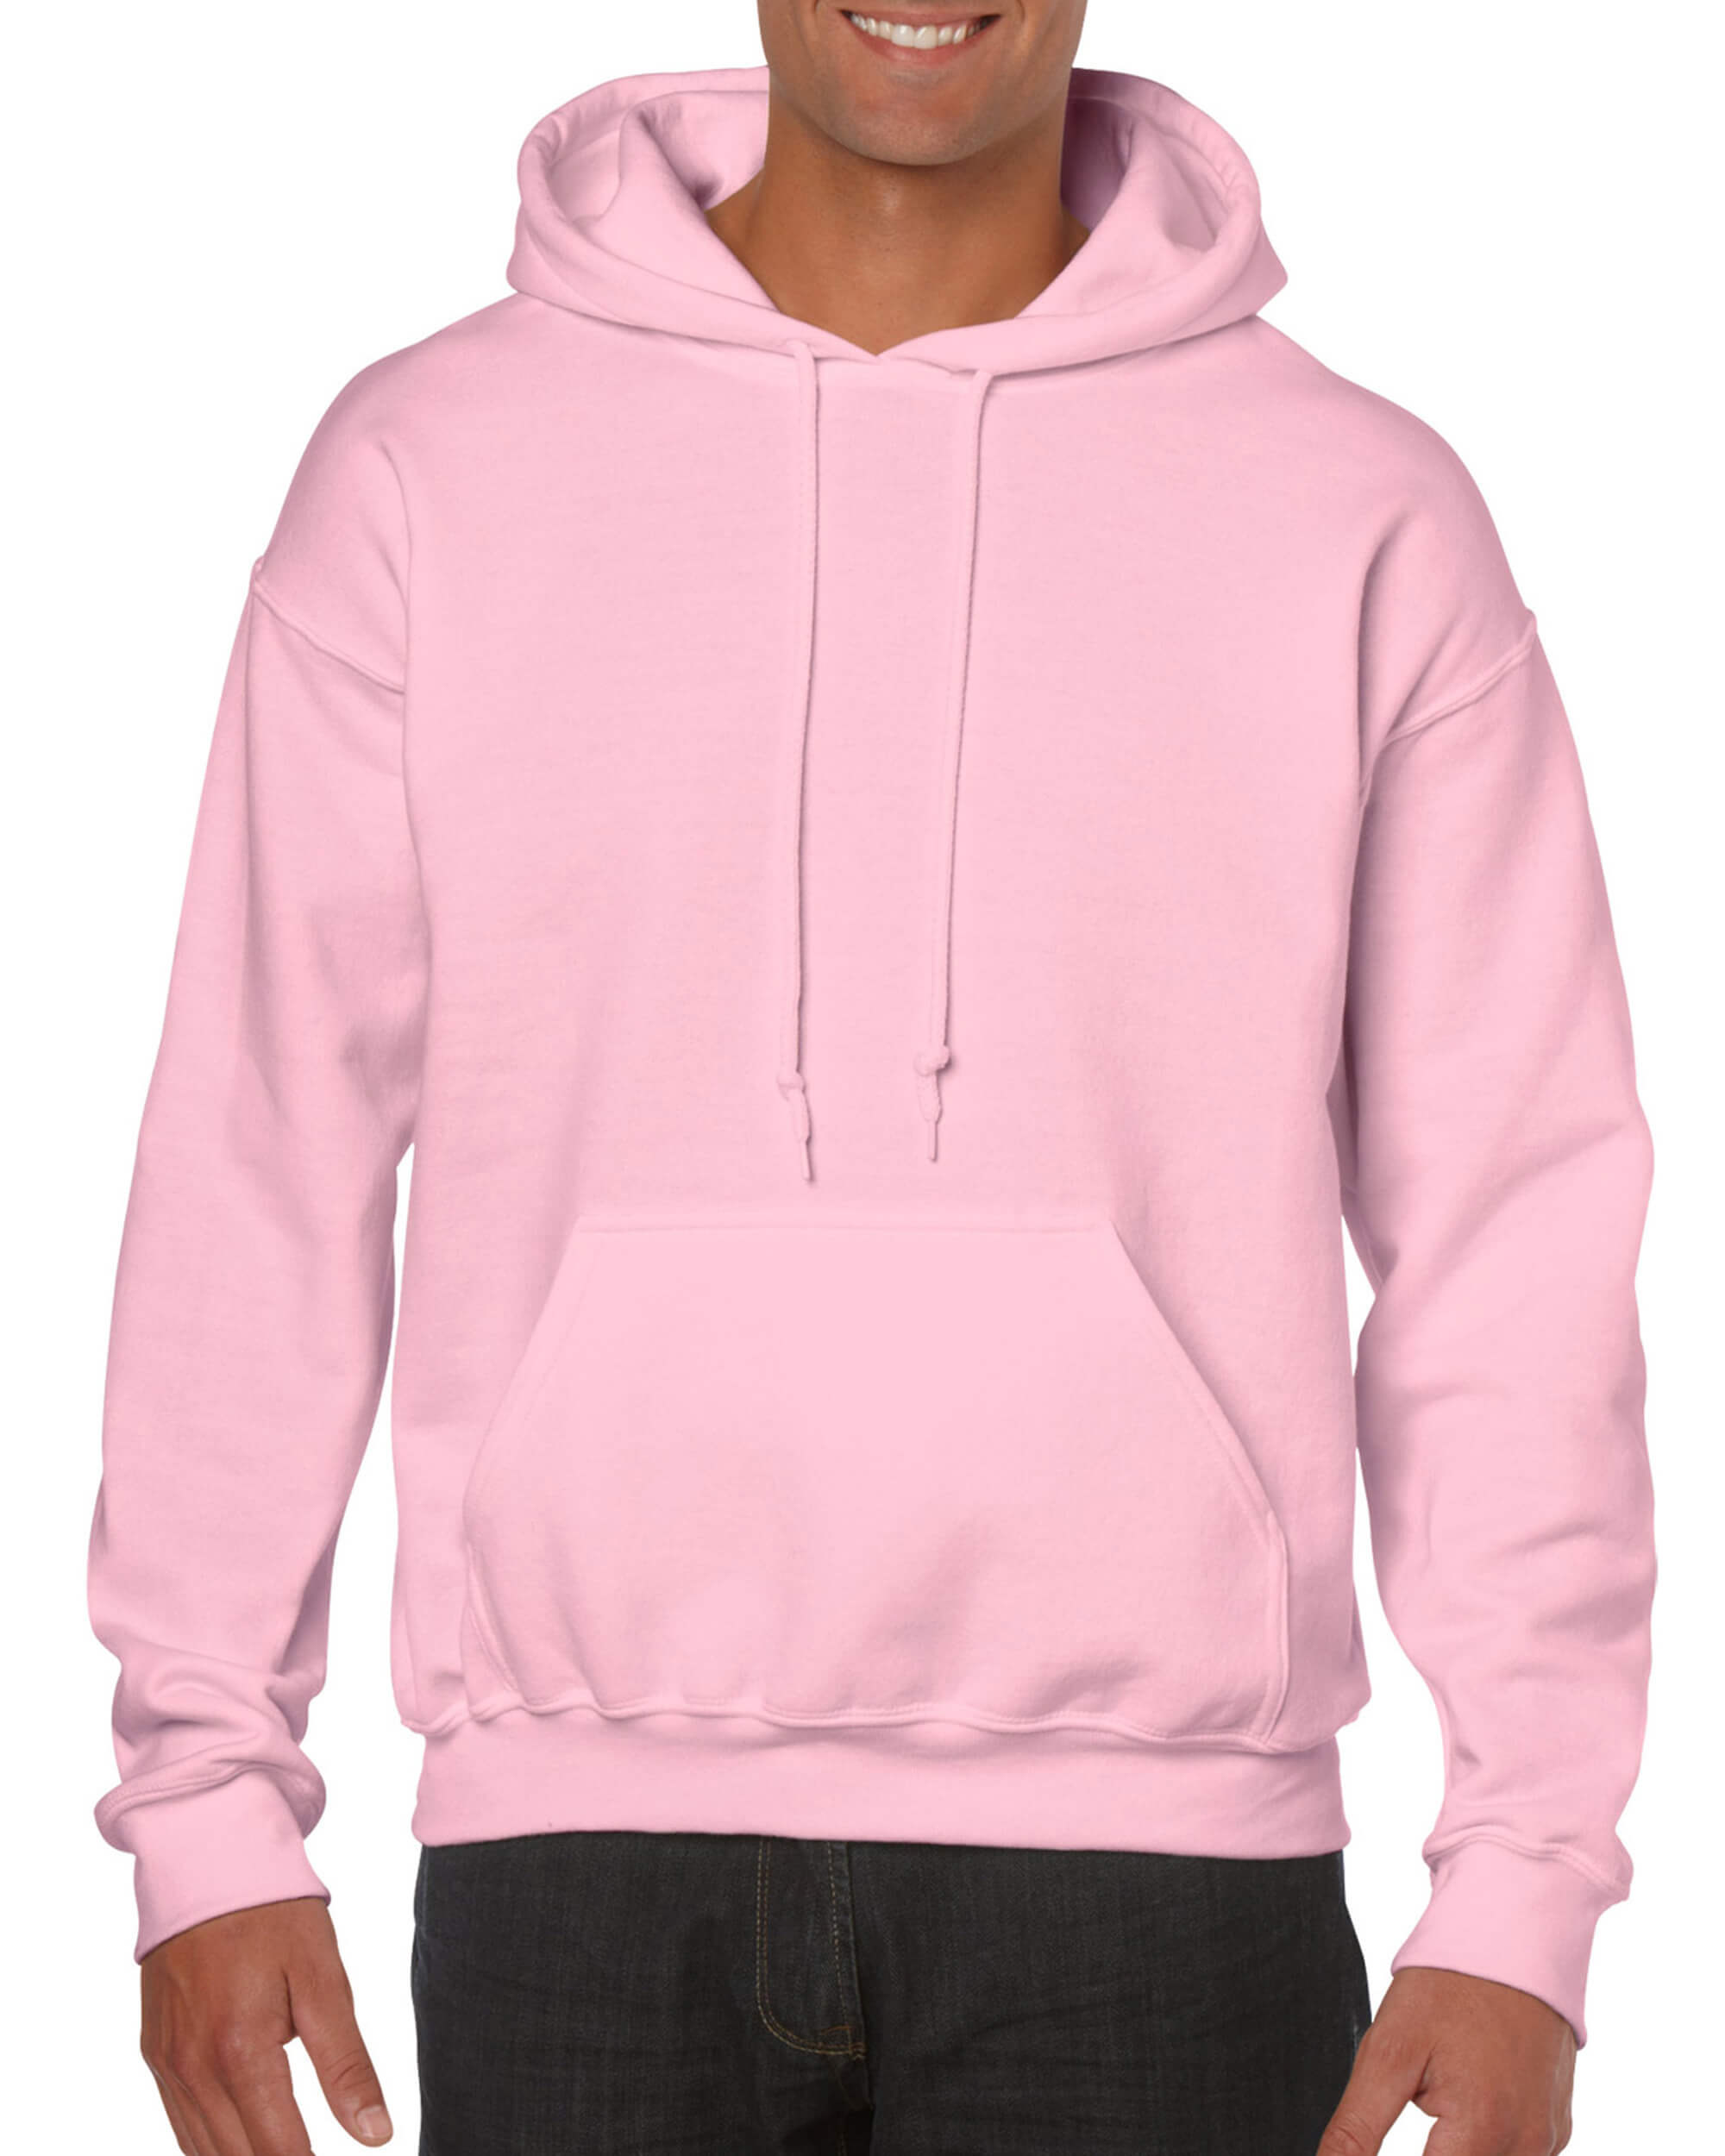 Pullover Hoodie - Light Pink